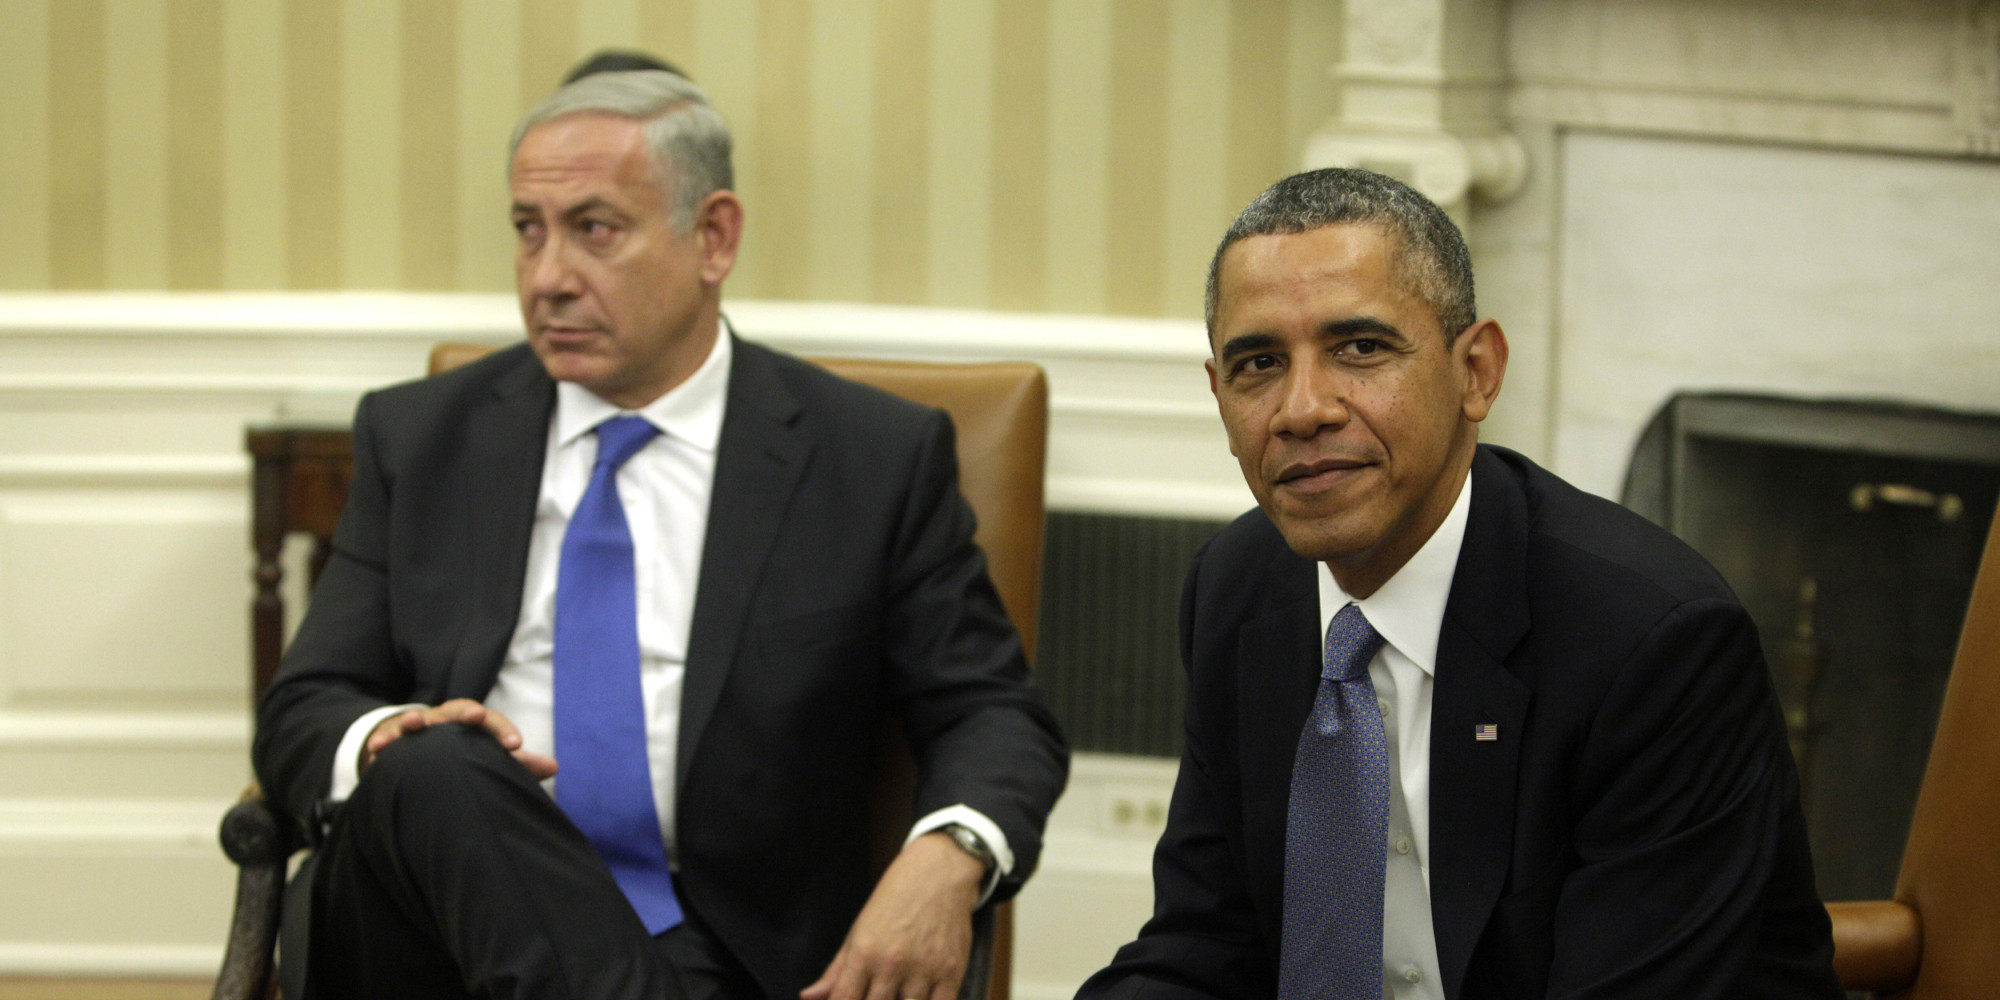 President Obama Meets With Israeli Prime Minister Netanyahu